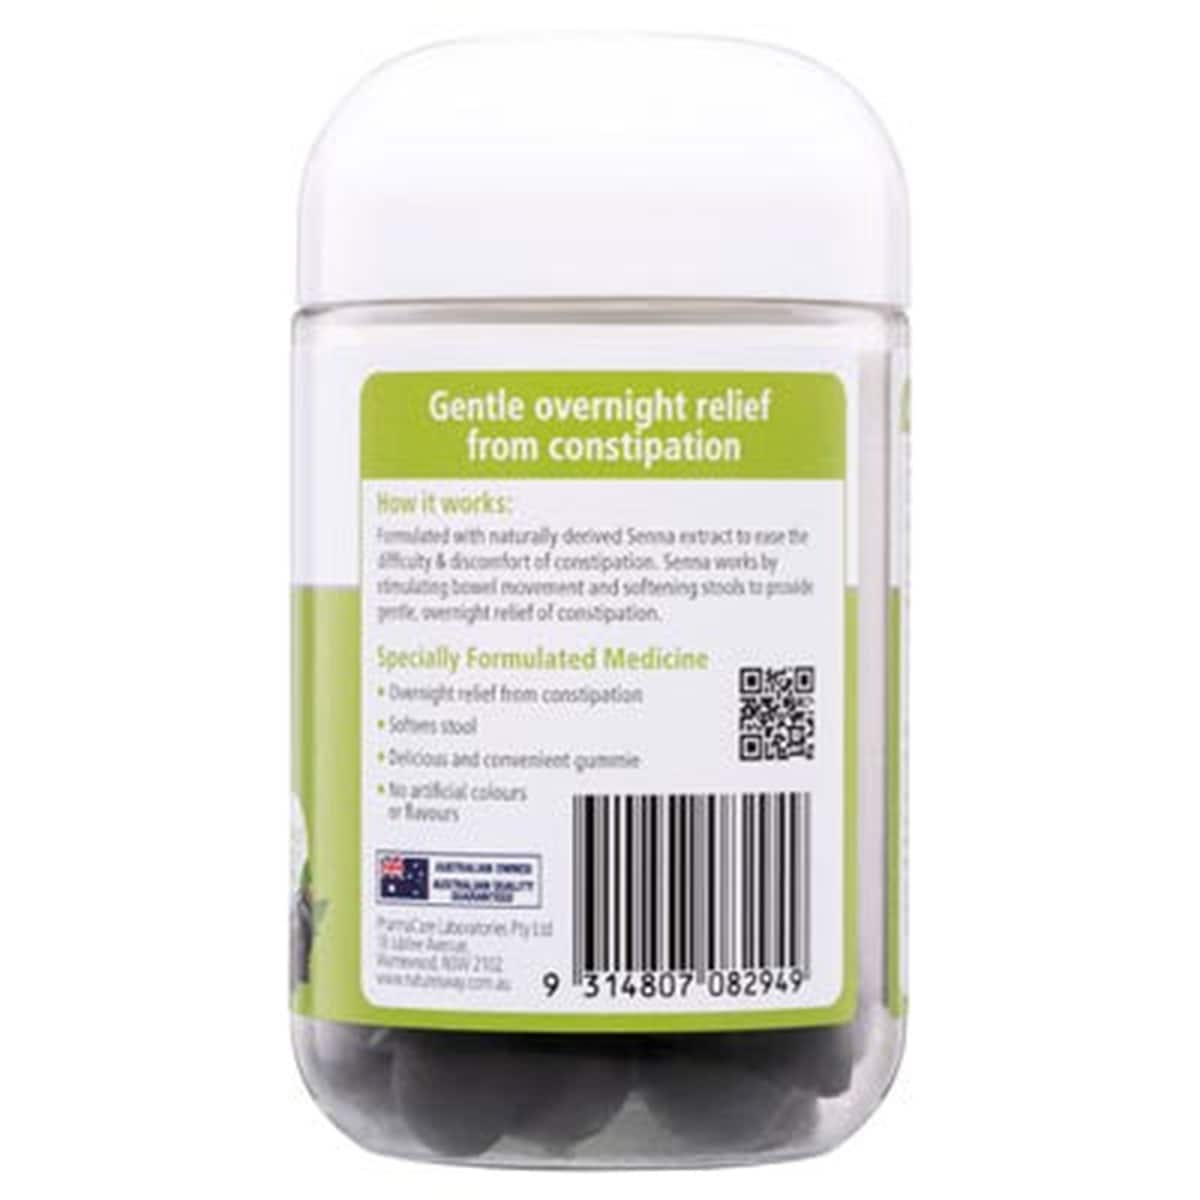 Natures Way Medicinal Vita Gummies Laxative 30 Pack